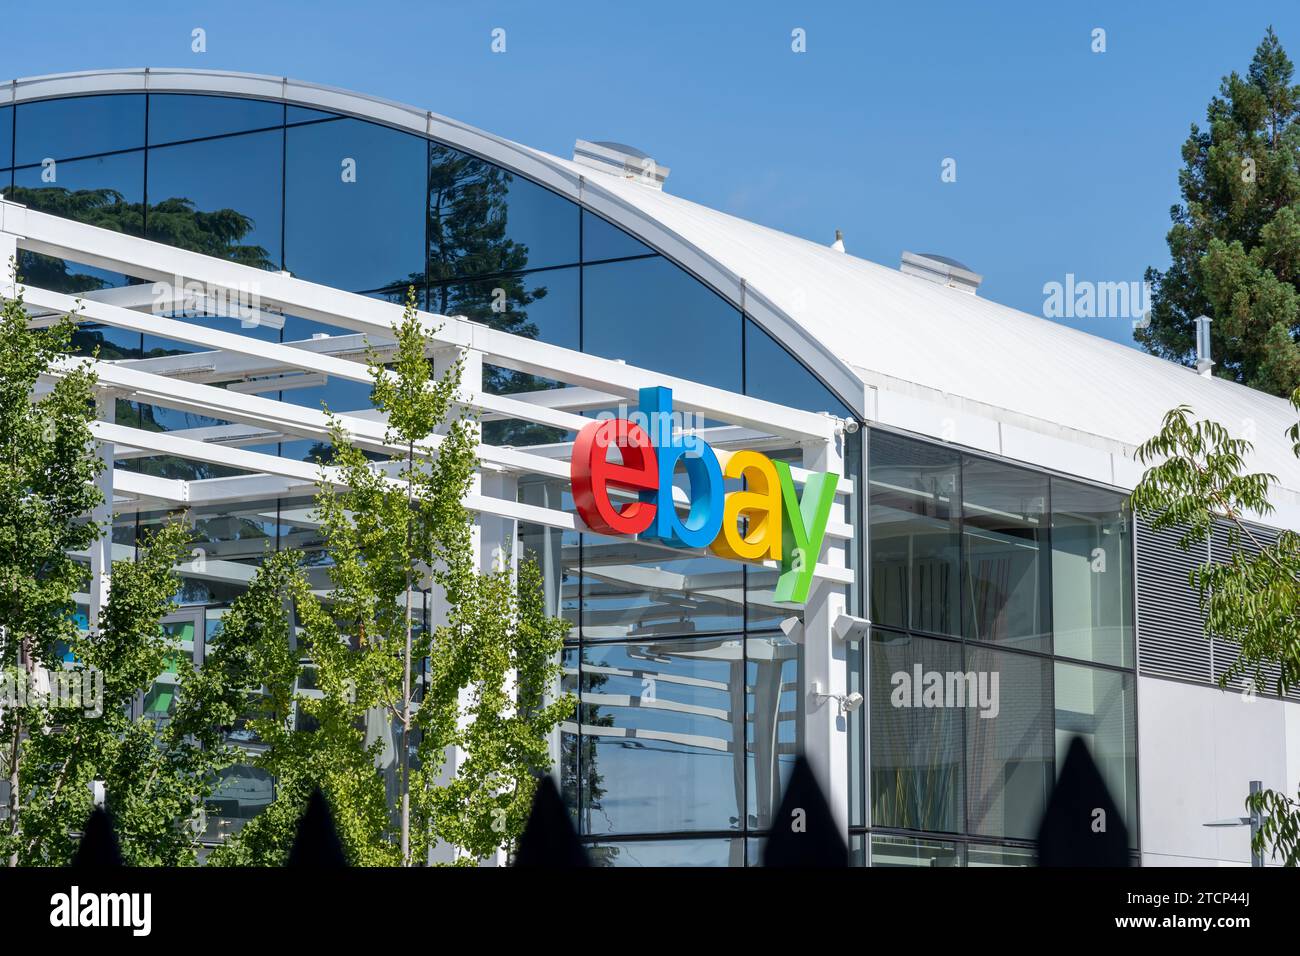 eBay's welcome center at eBay 's headquarters campus in San Jose, California, USA Stock Photo